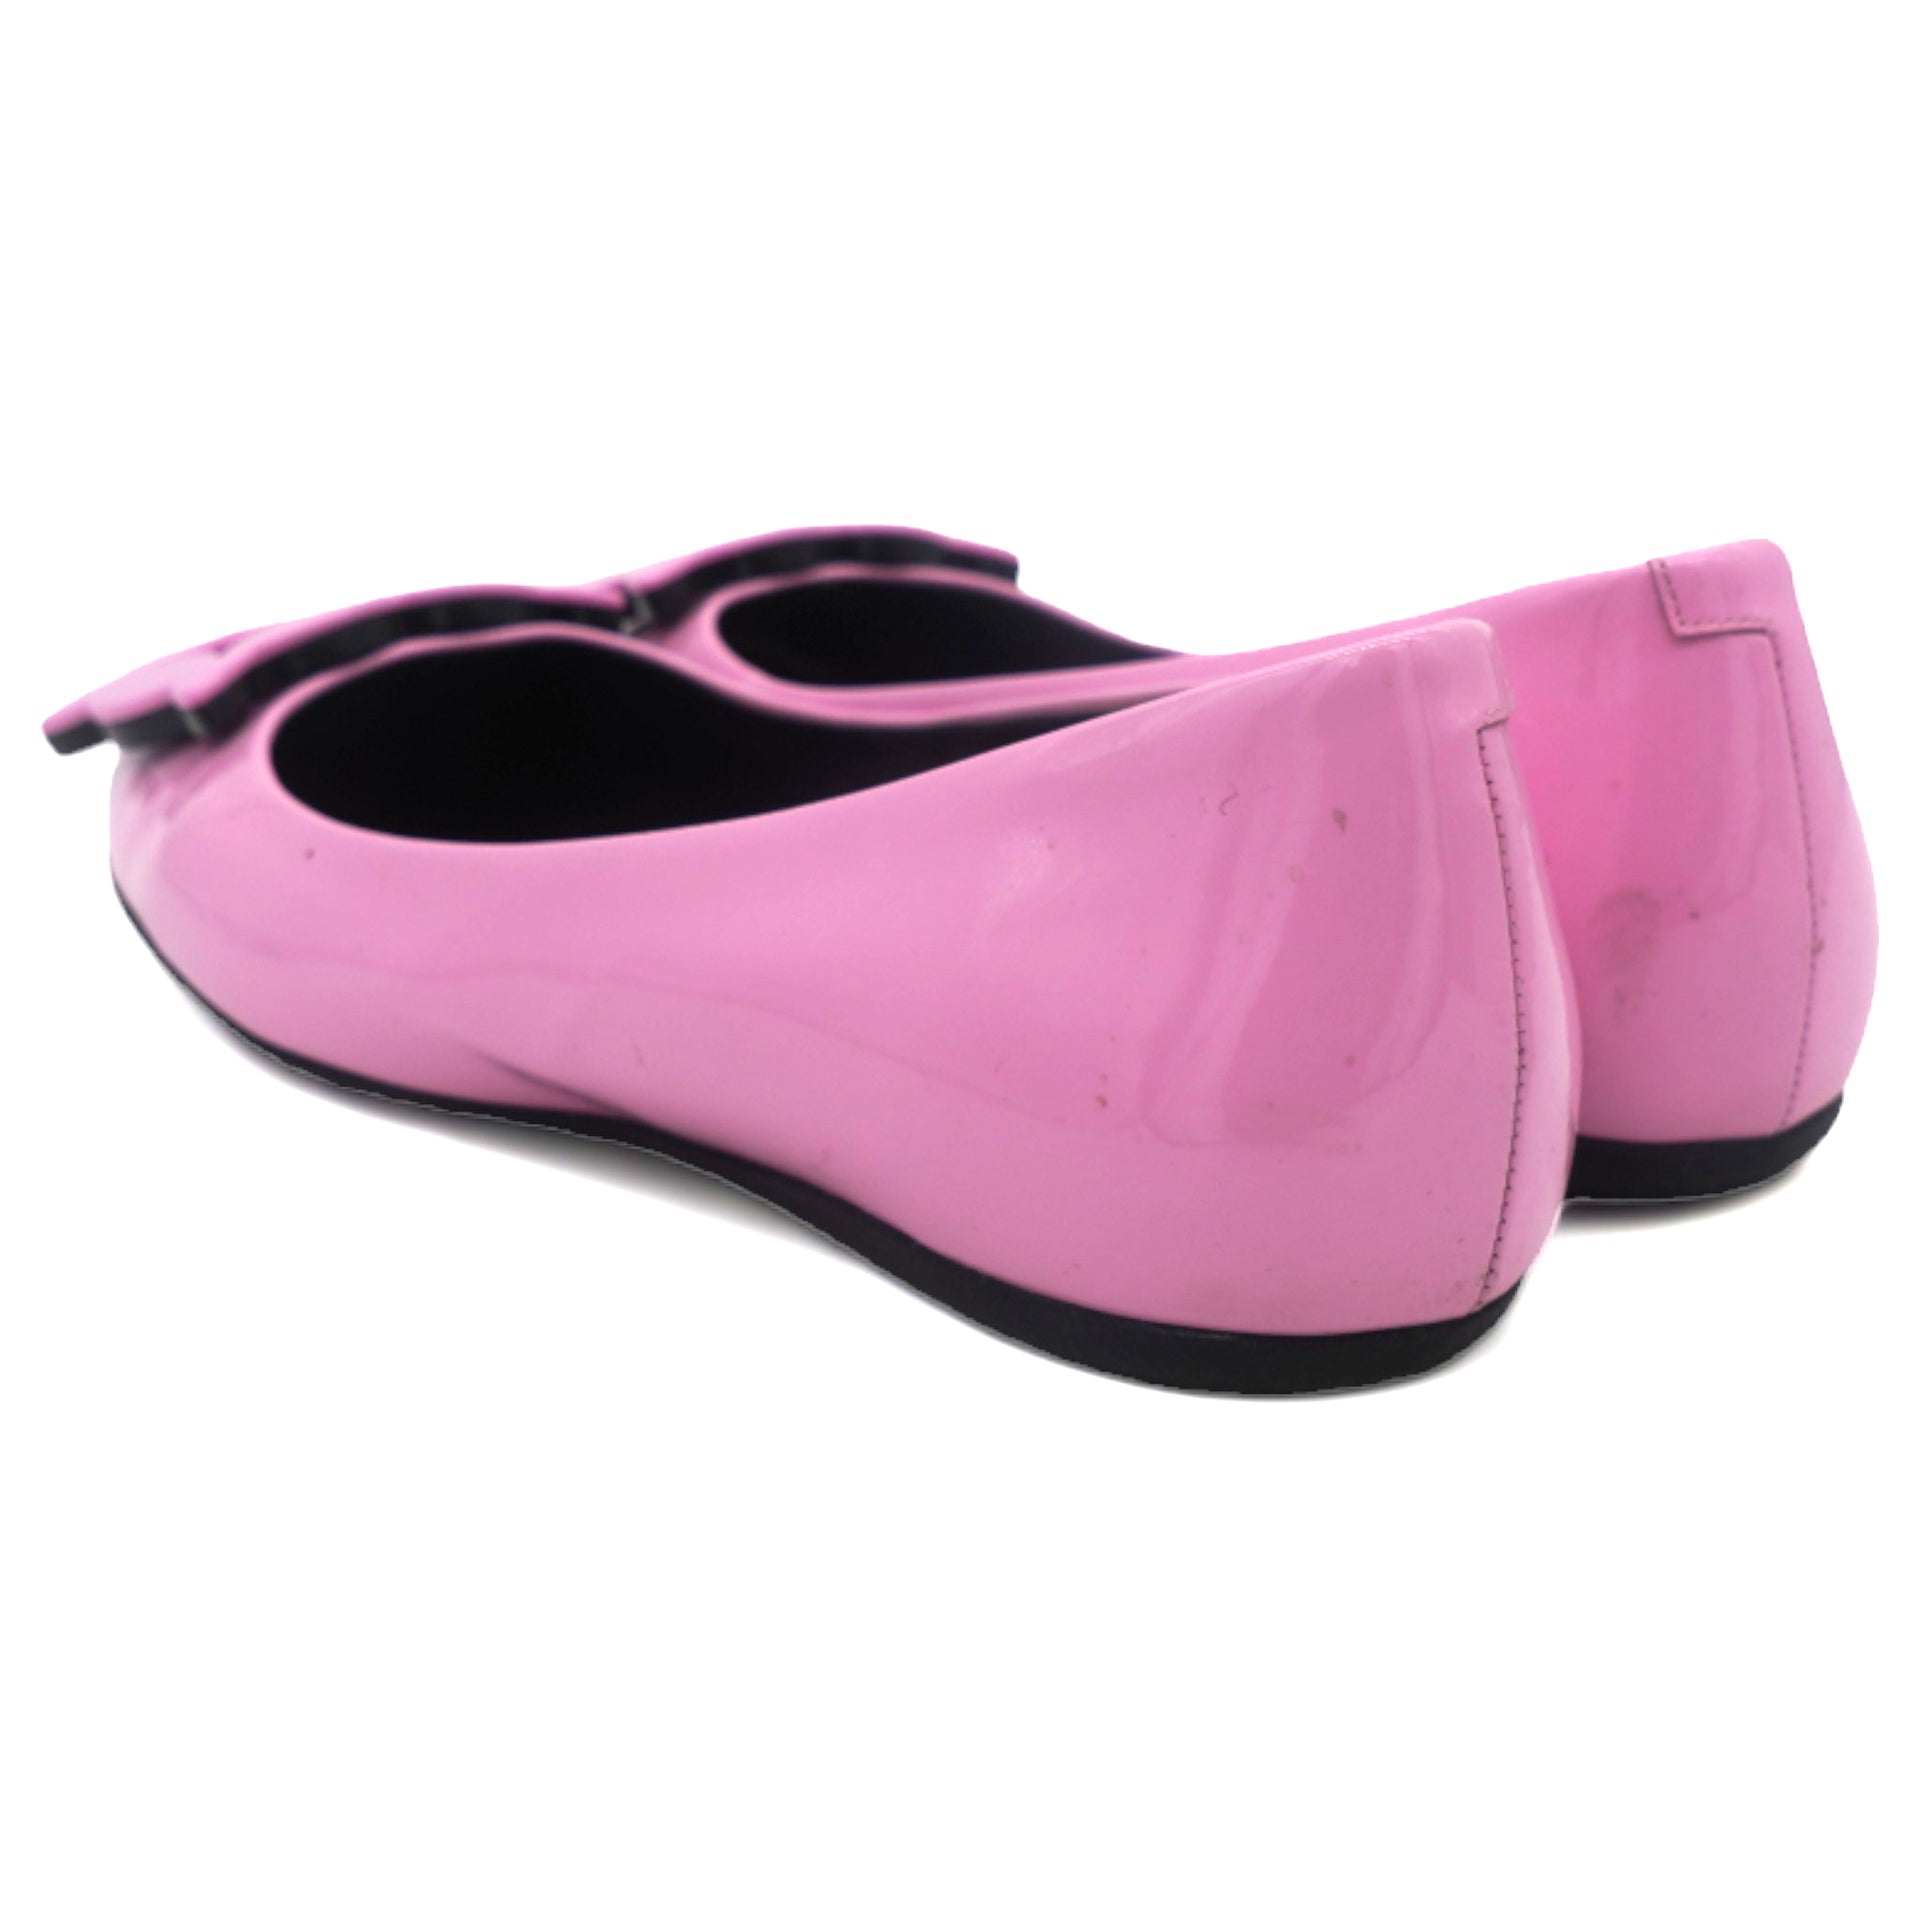 Trompette Pink Patent Ballerina Flats 35.5